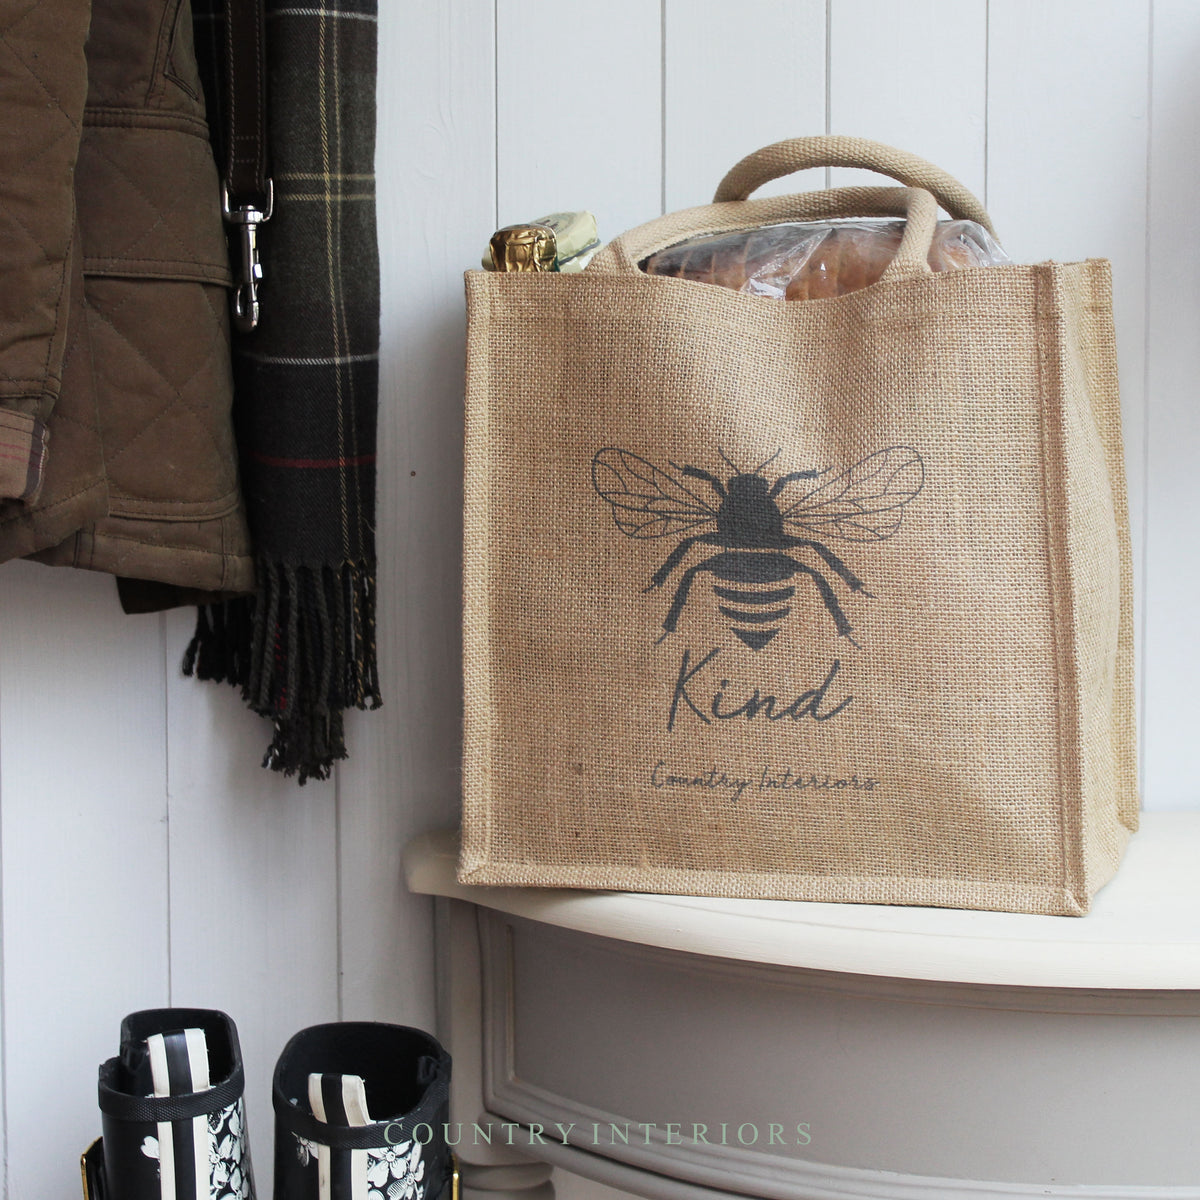 Jute bag, bumblebee design, shopper bag, shopping bag, eco friendly, plastic free, stylish jute bag